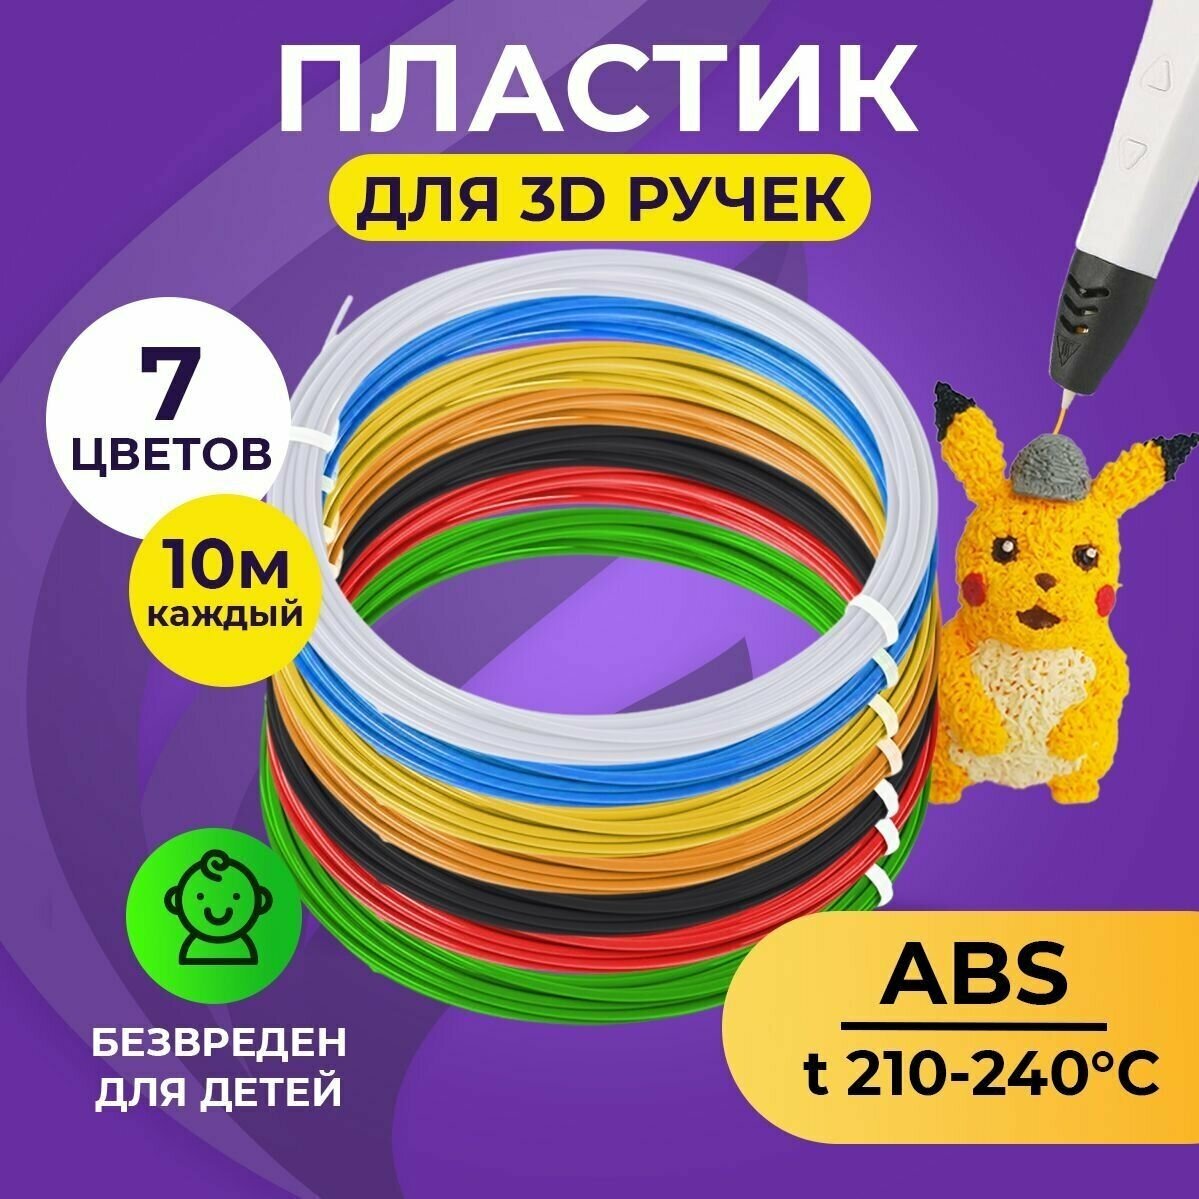 Набор ABS-пластика для 3D ручек (7 цветов по 10 метров) Funtasy / картриджи для 3д ручки  стержни для 3д ручки абс